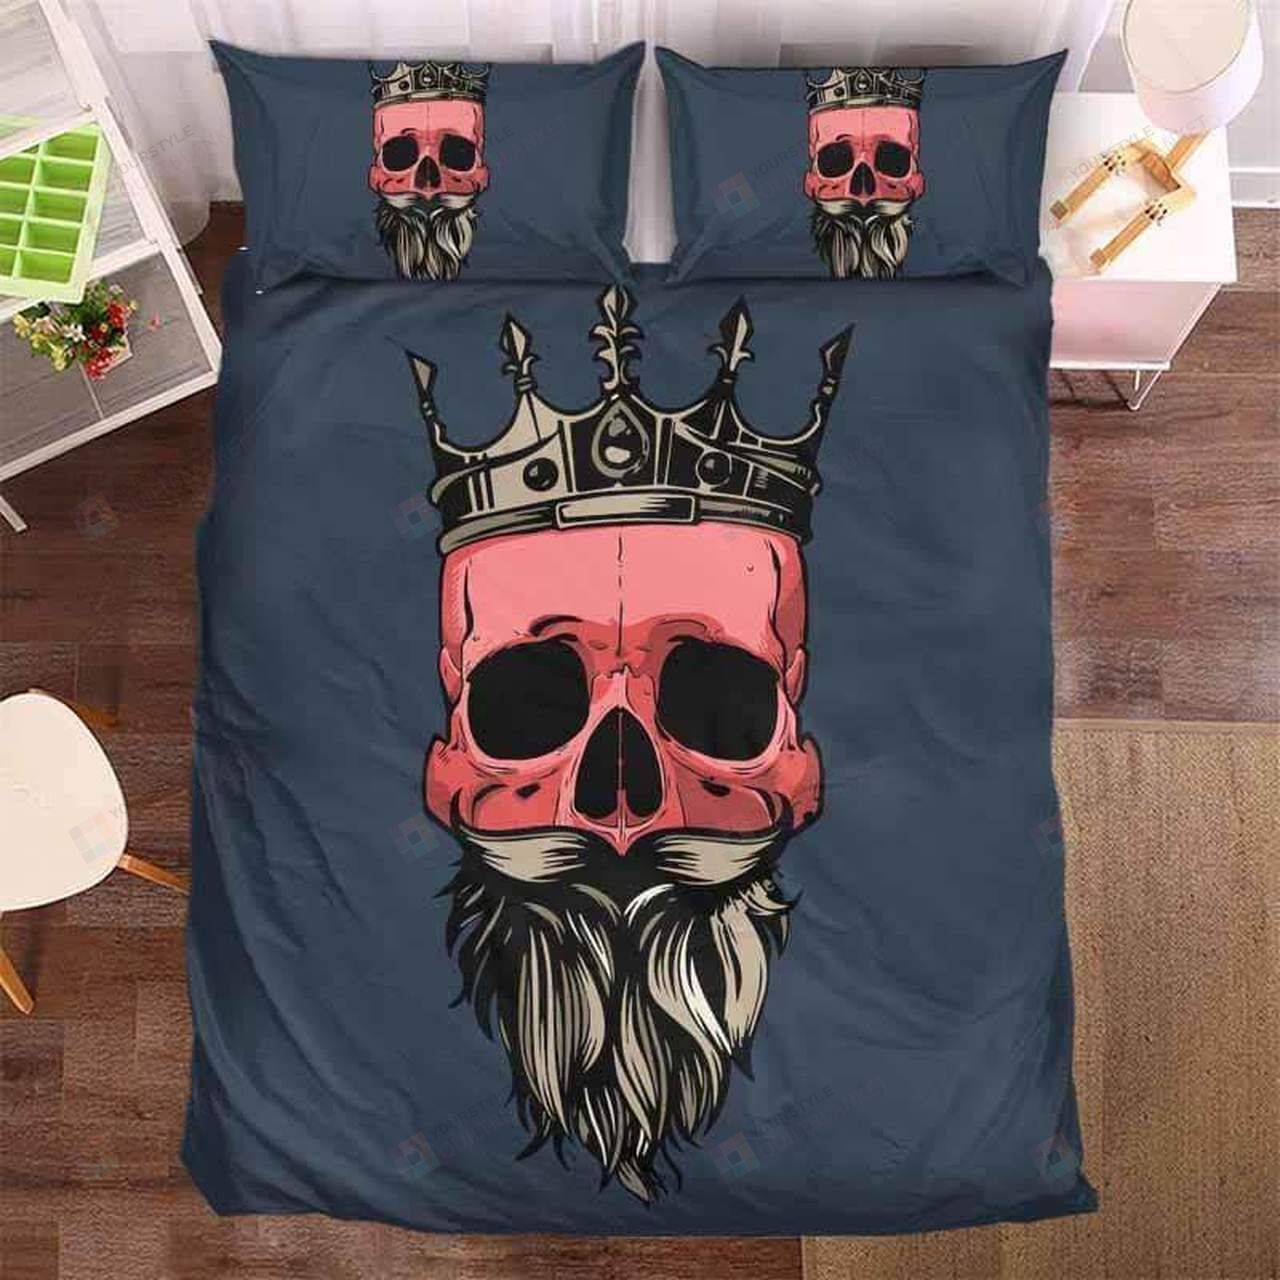 Old Red Skull King Illustartion Bedding Set